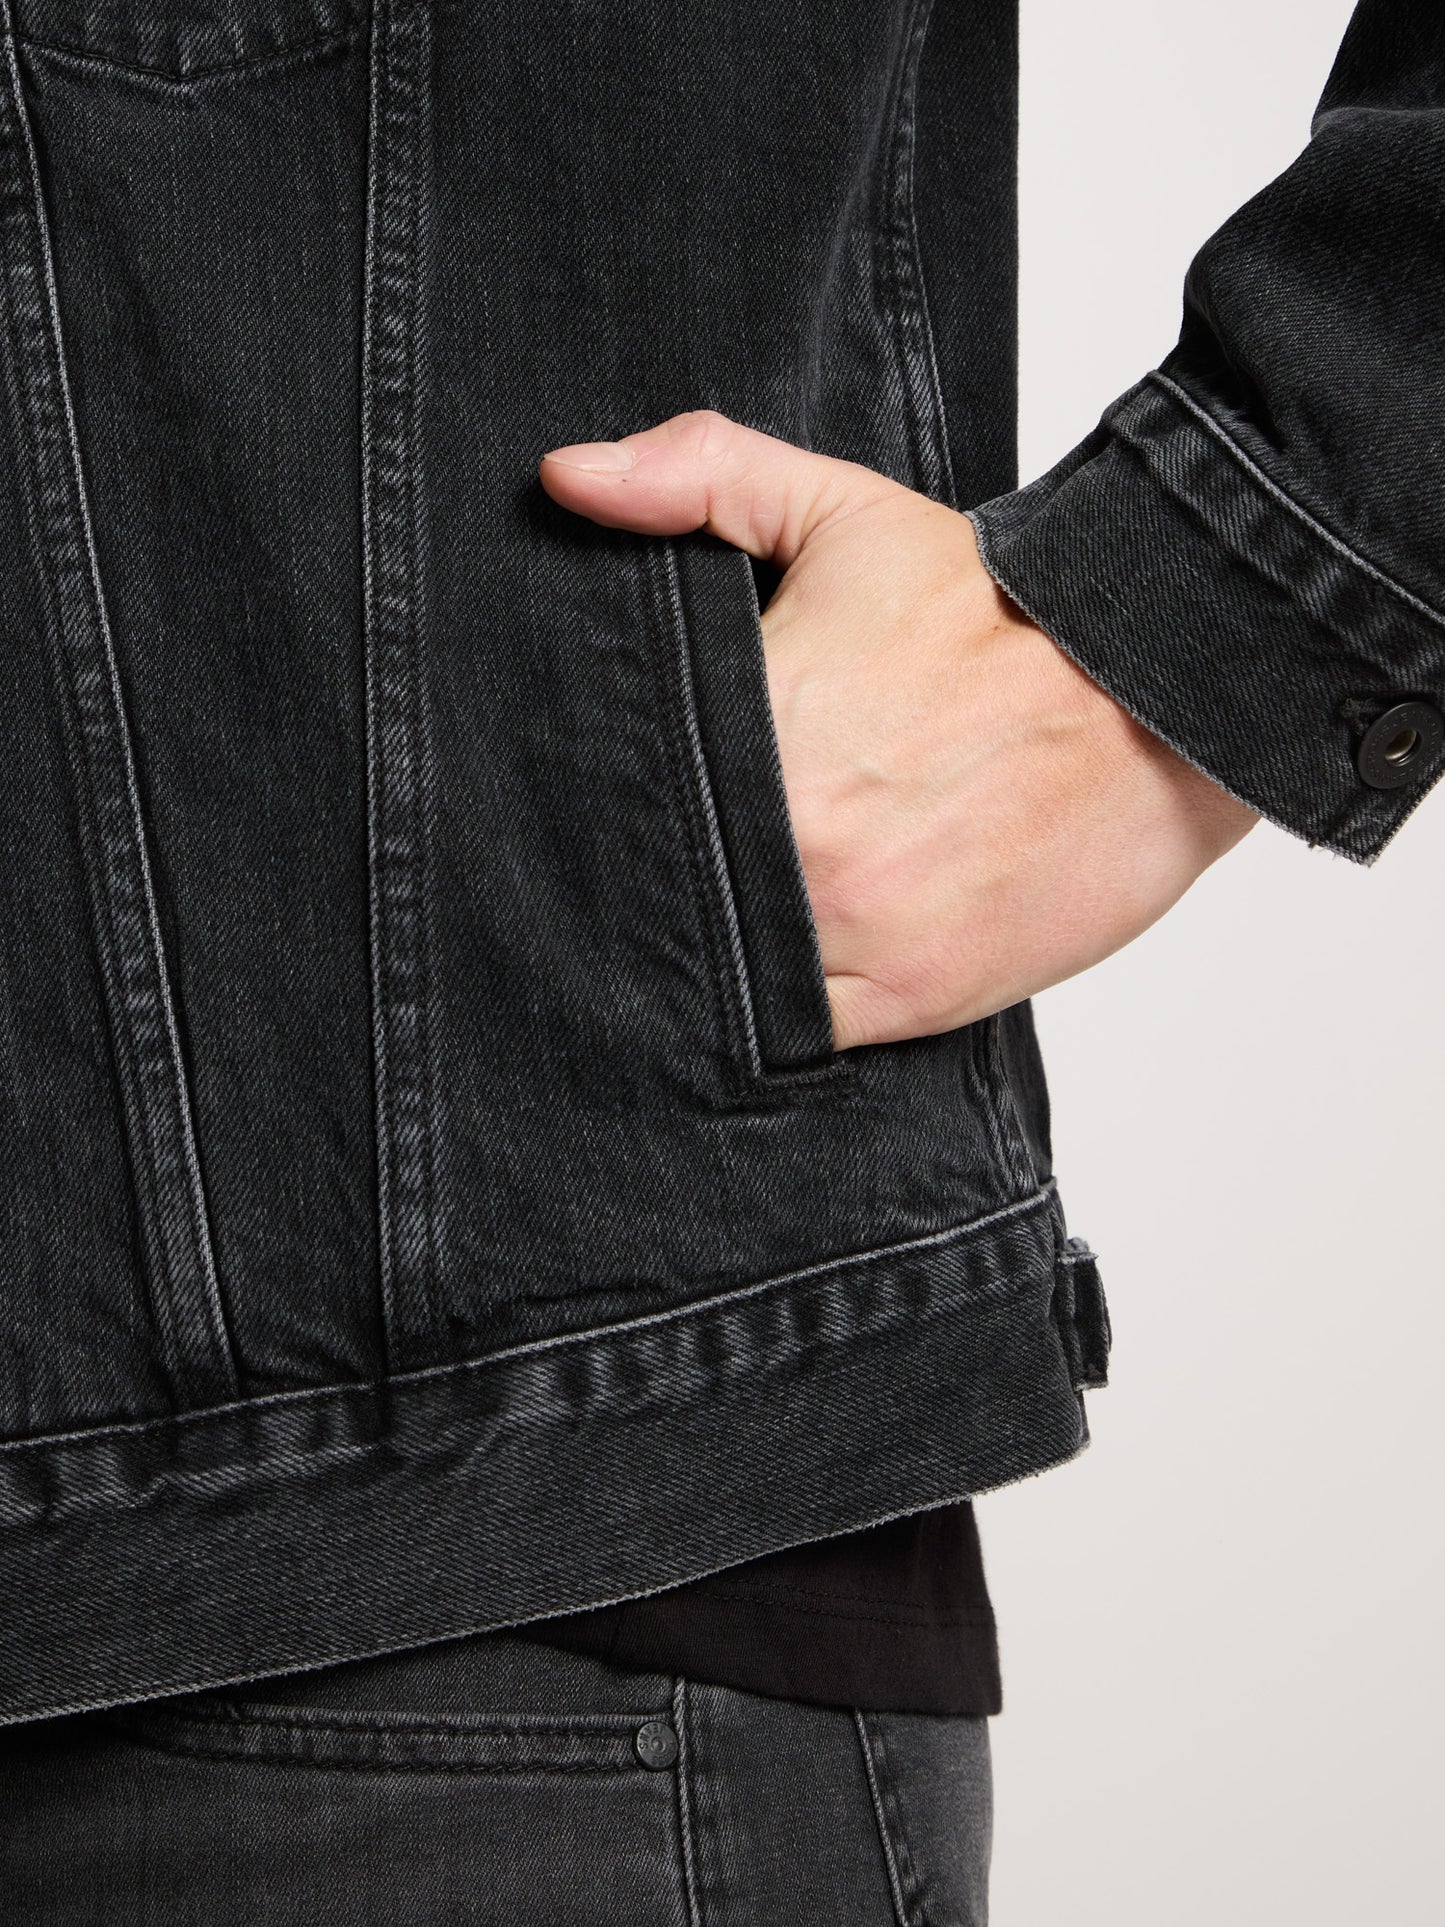 Men's regular denim jacket with button placket, black.